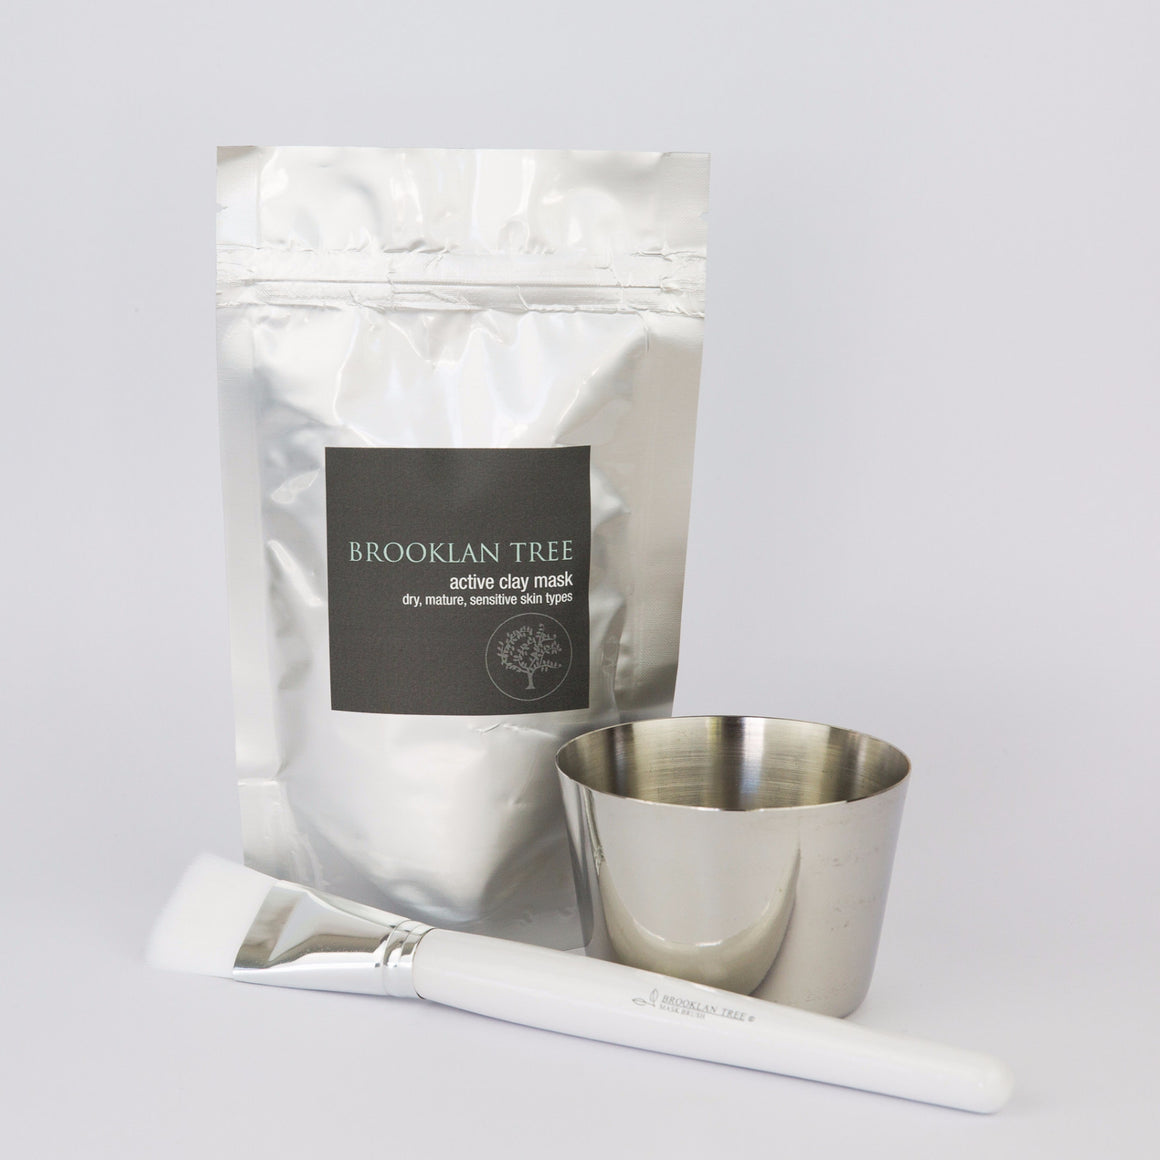 Active Clay Mask Kit for Dry, Mature & Sensitive Skin - Brooklan Tree